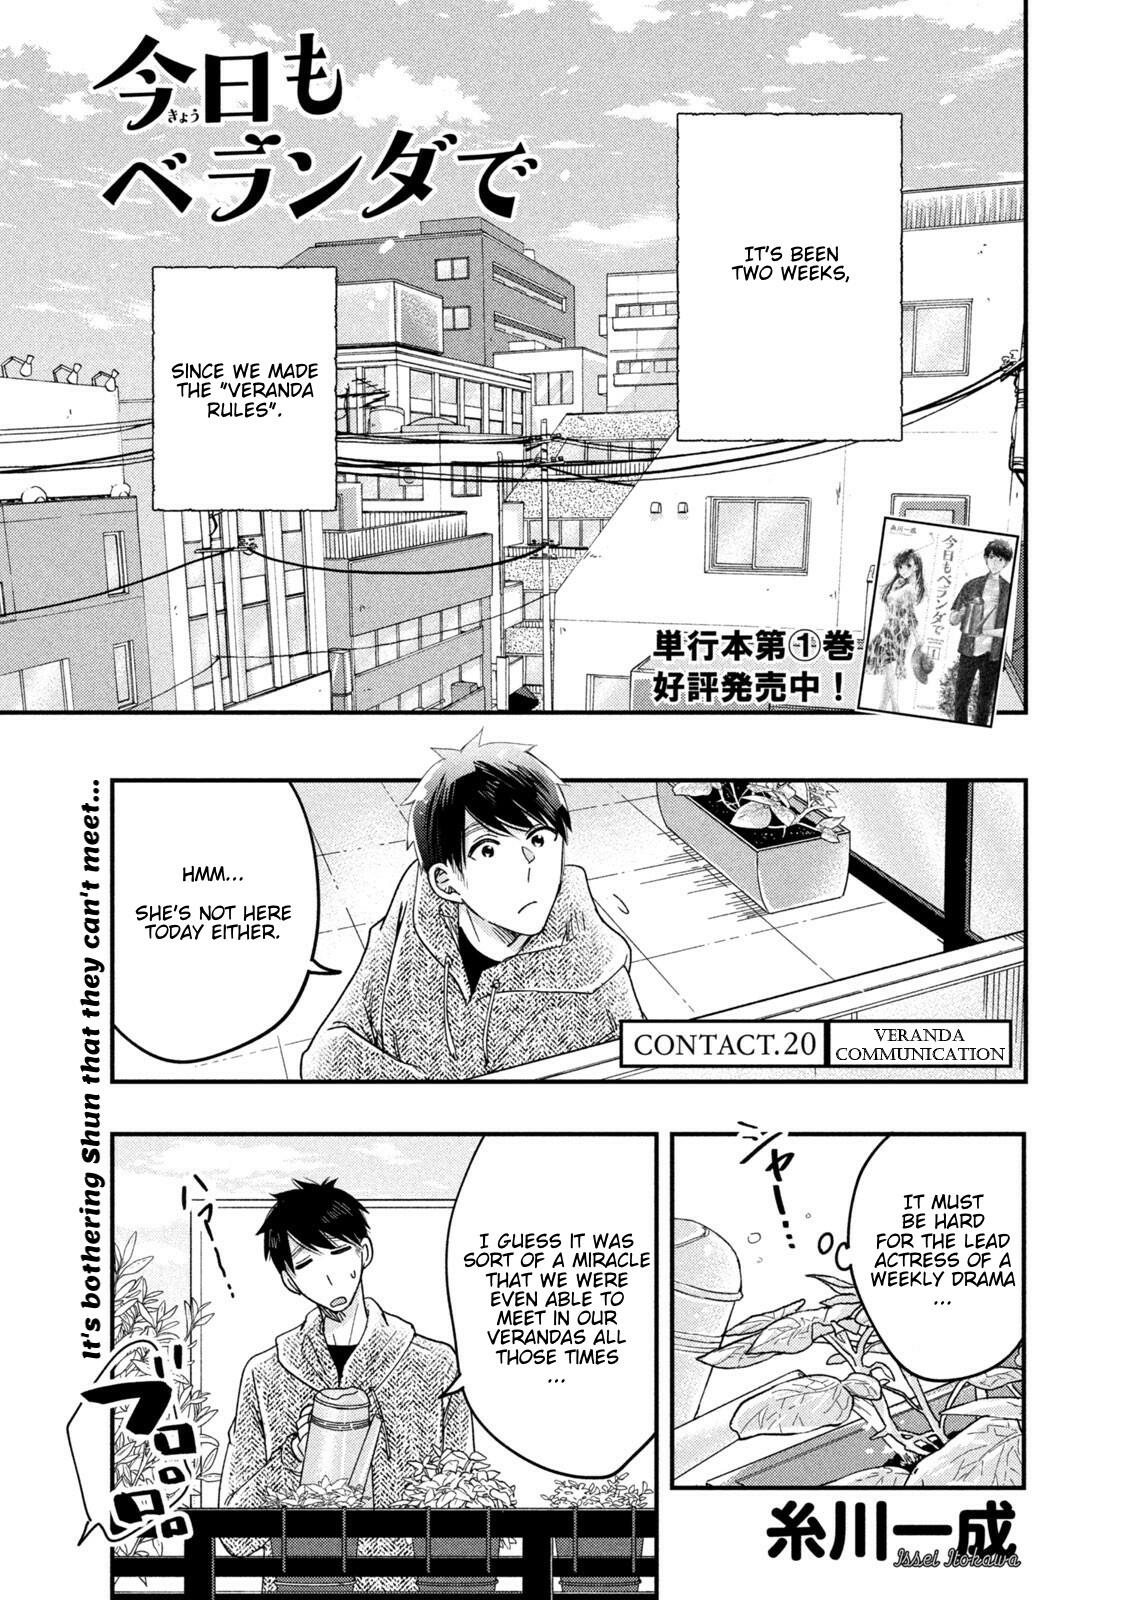 Read Manga I Can Copy Talents - Chapter 20